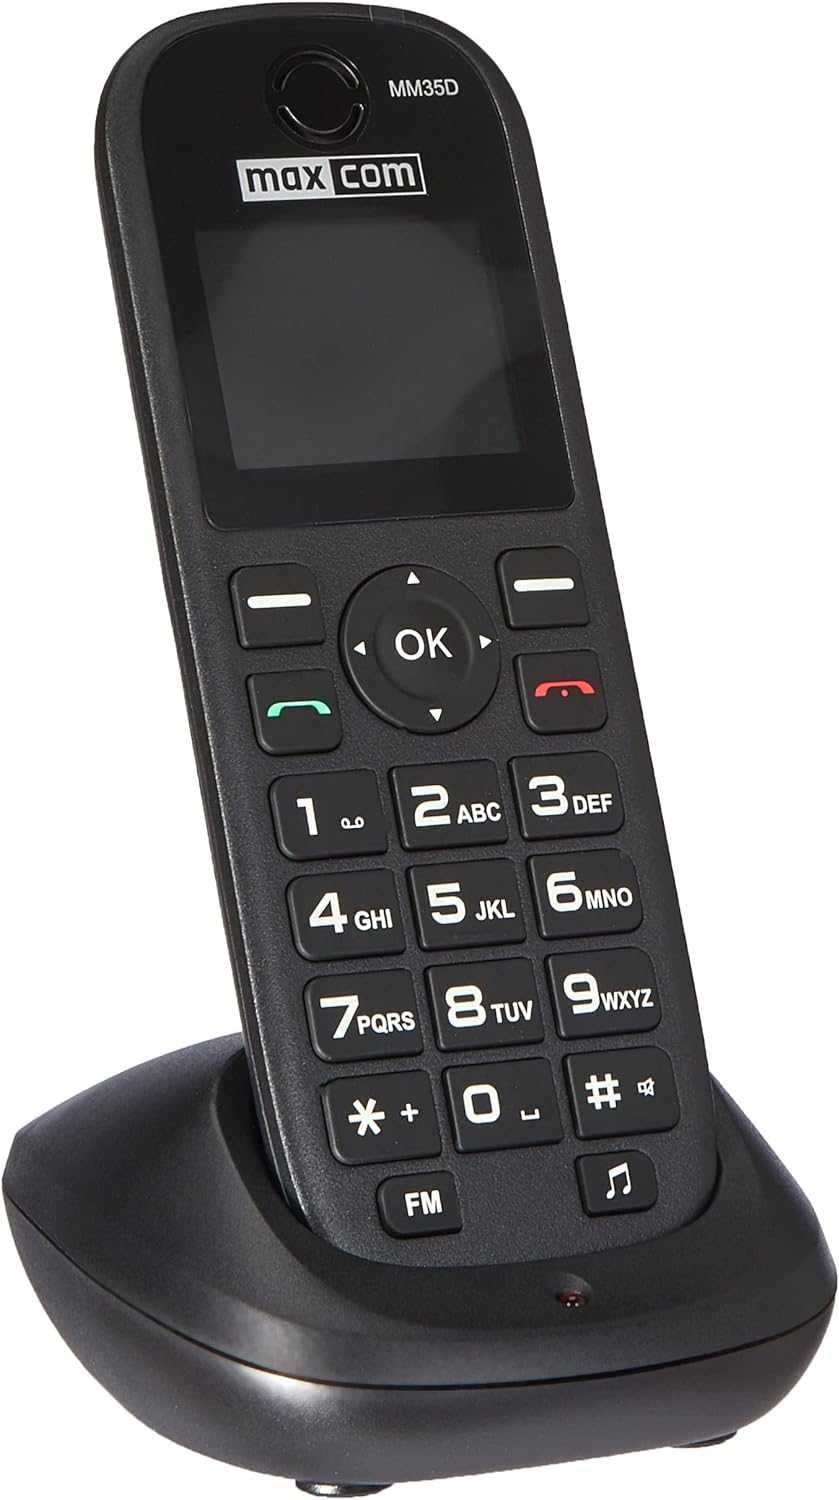 Maxcom MM35D telefoane NOI pentru SENIORI taste MARI sunet puternic